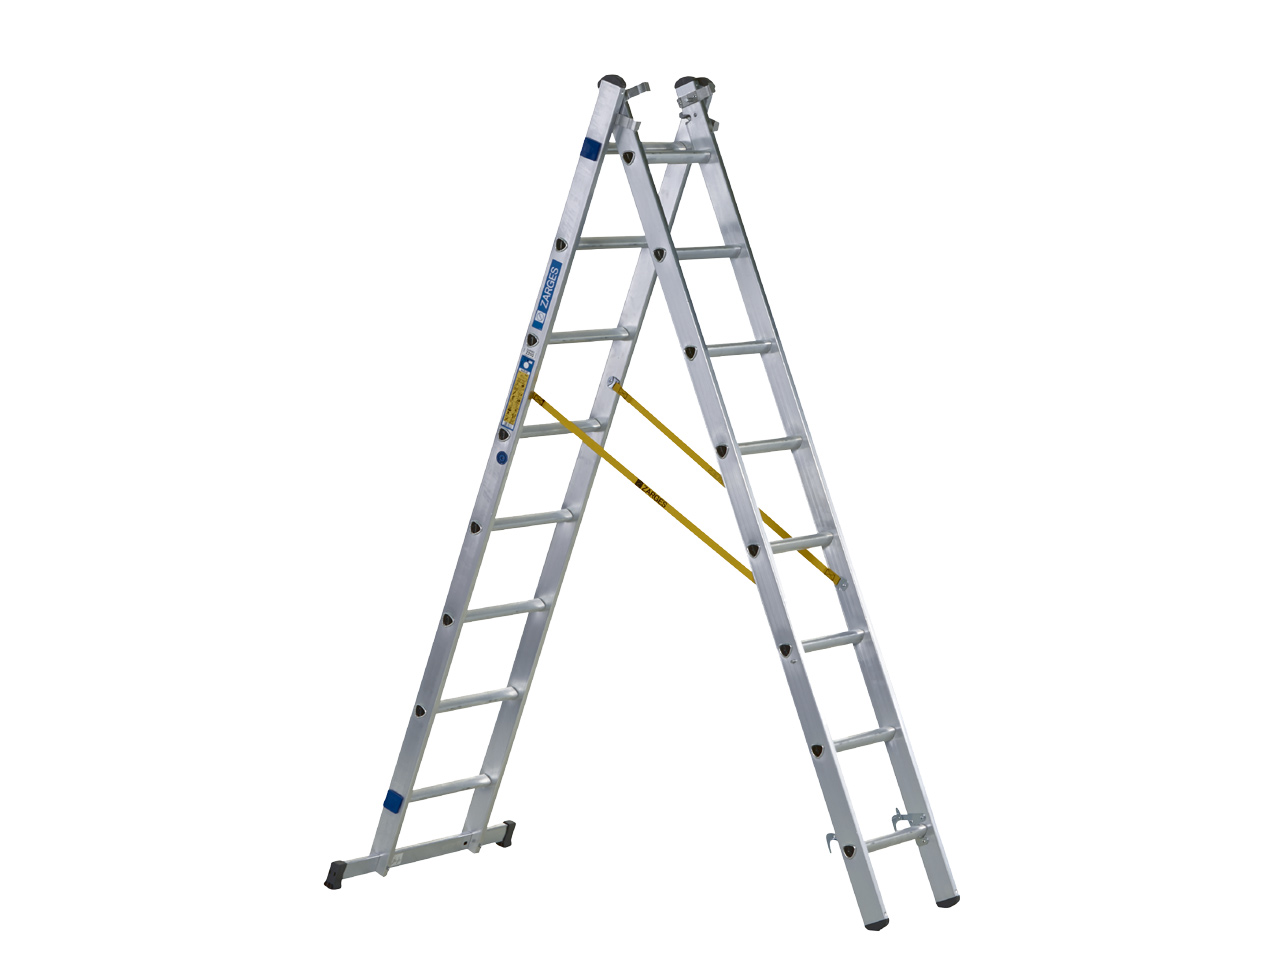 Zarges Triple Extension Ladder with Stabiliser Bar 3-Part D-Rungs 3 x 14 